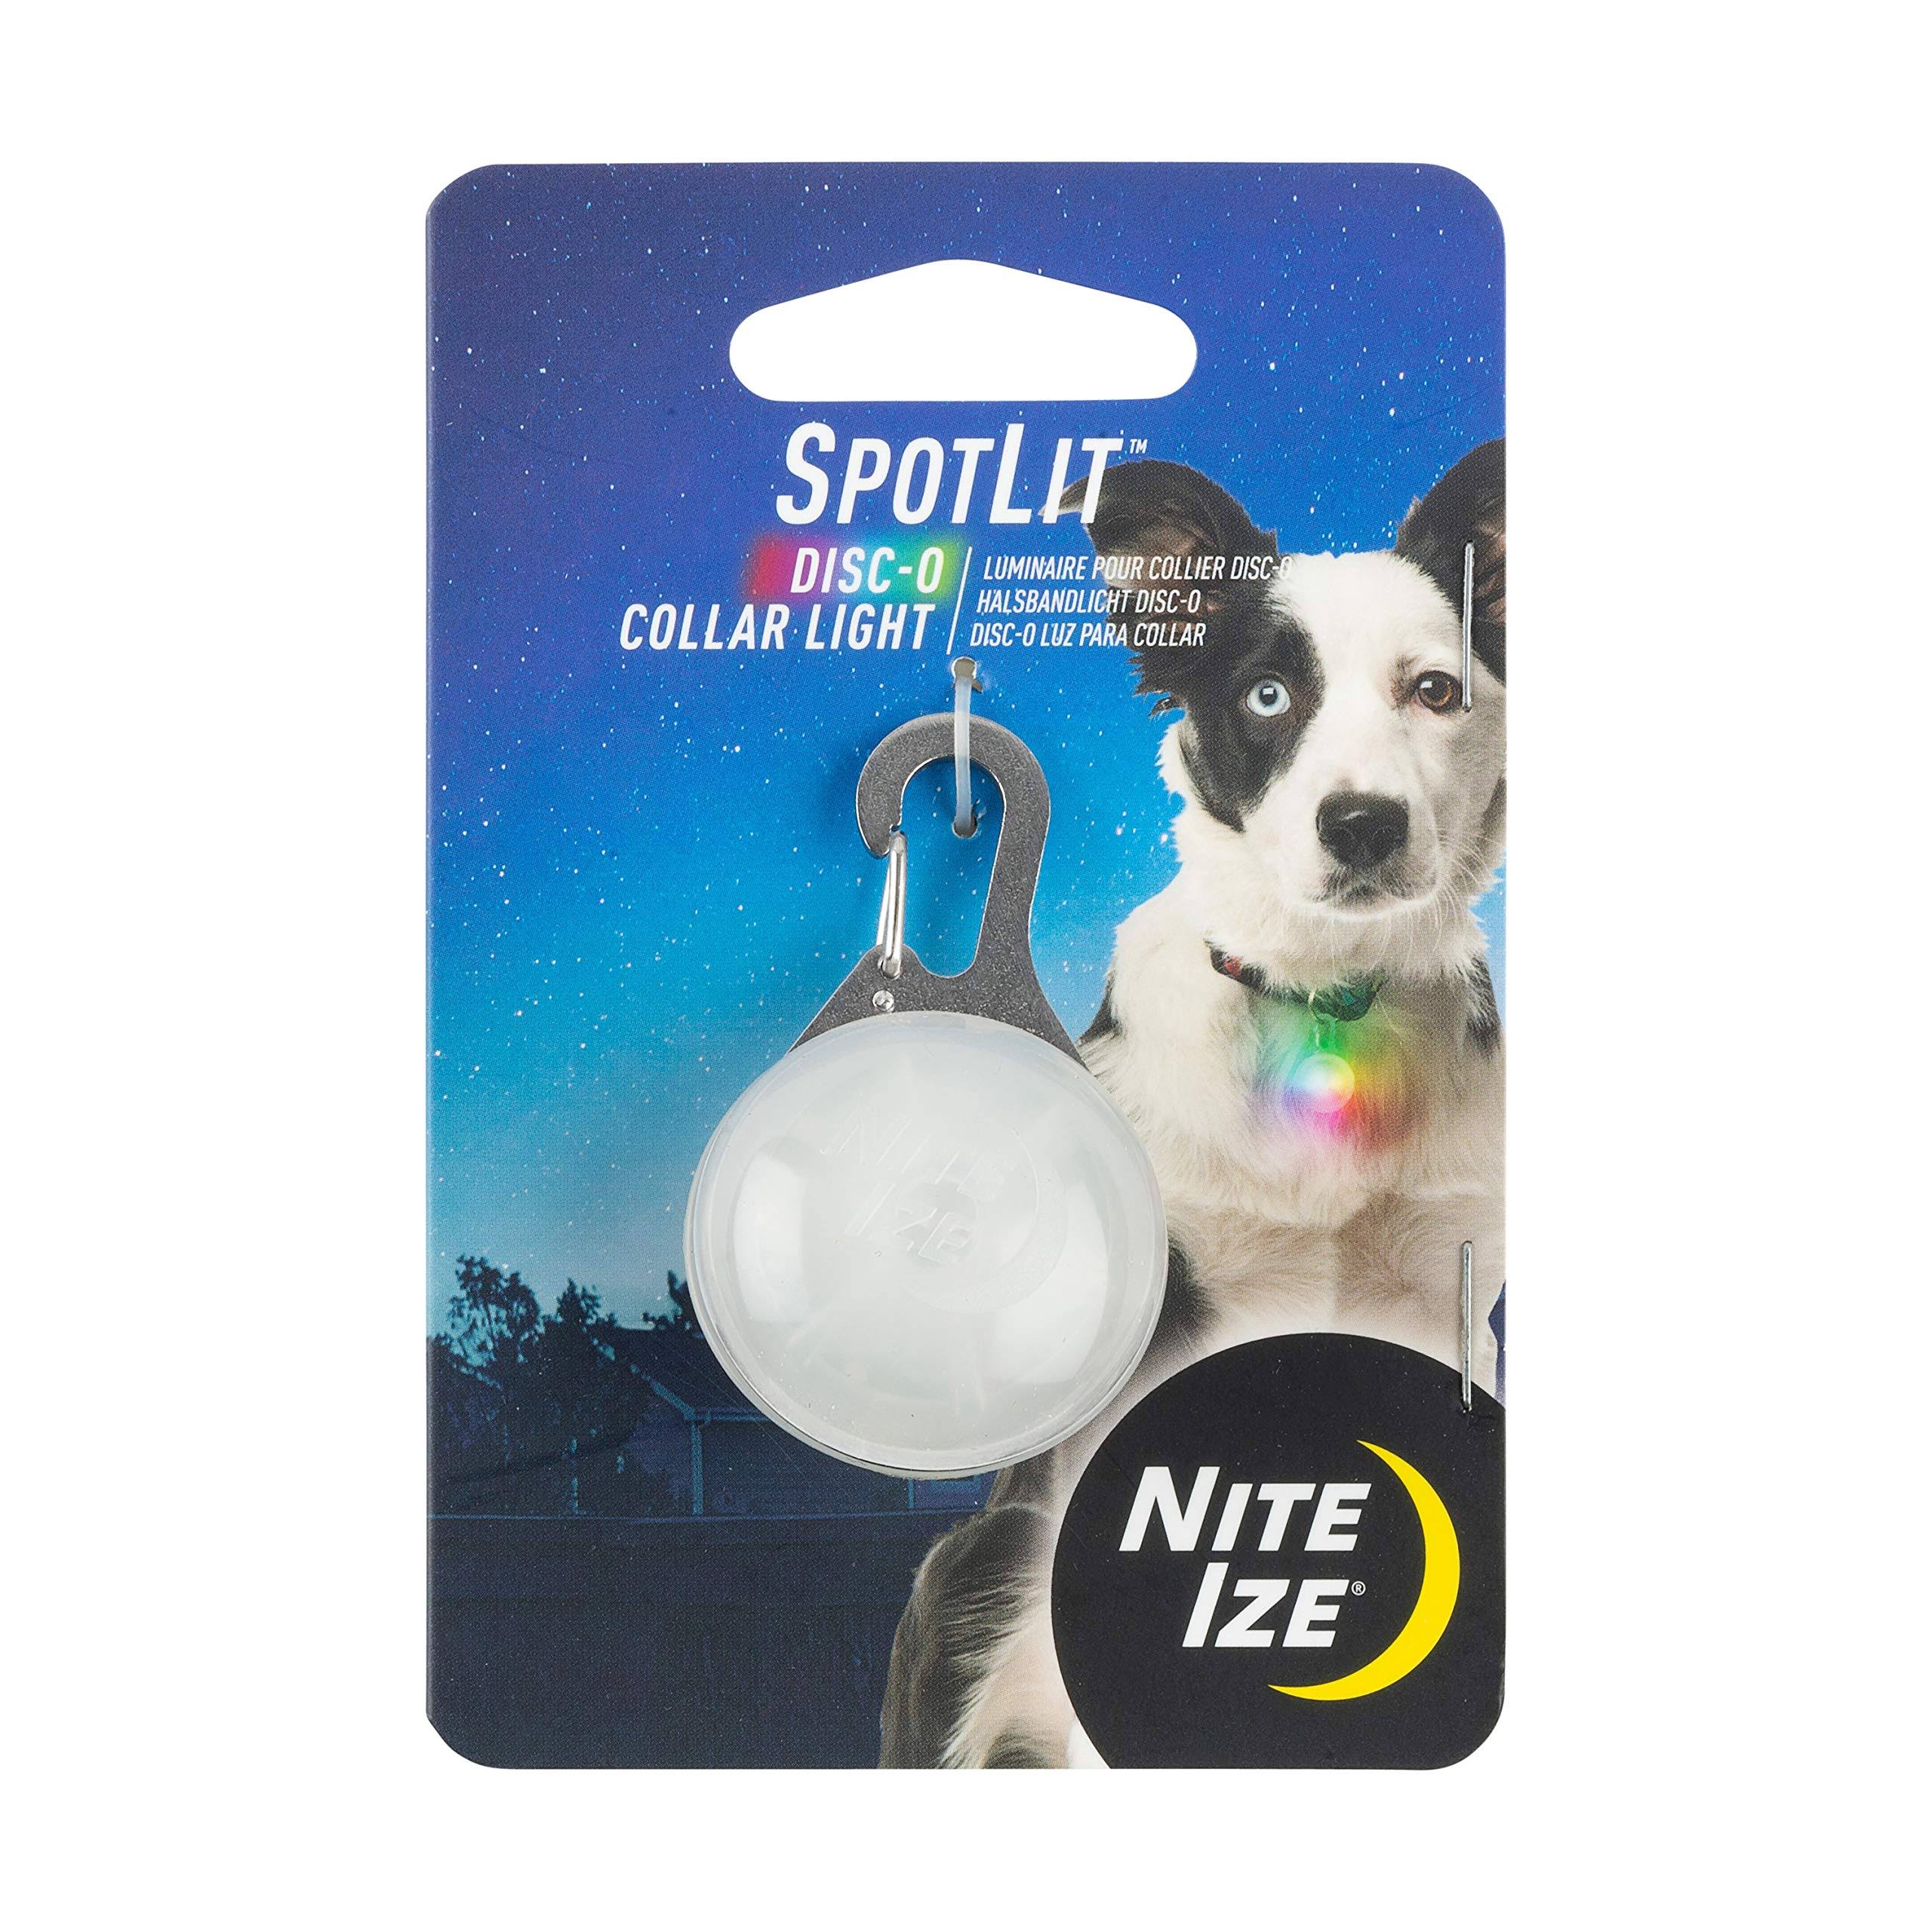 NITE IZE SpotLit Collar Light Disc-O